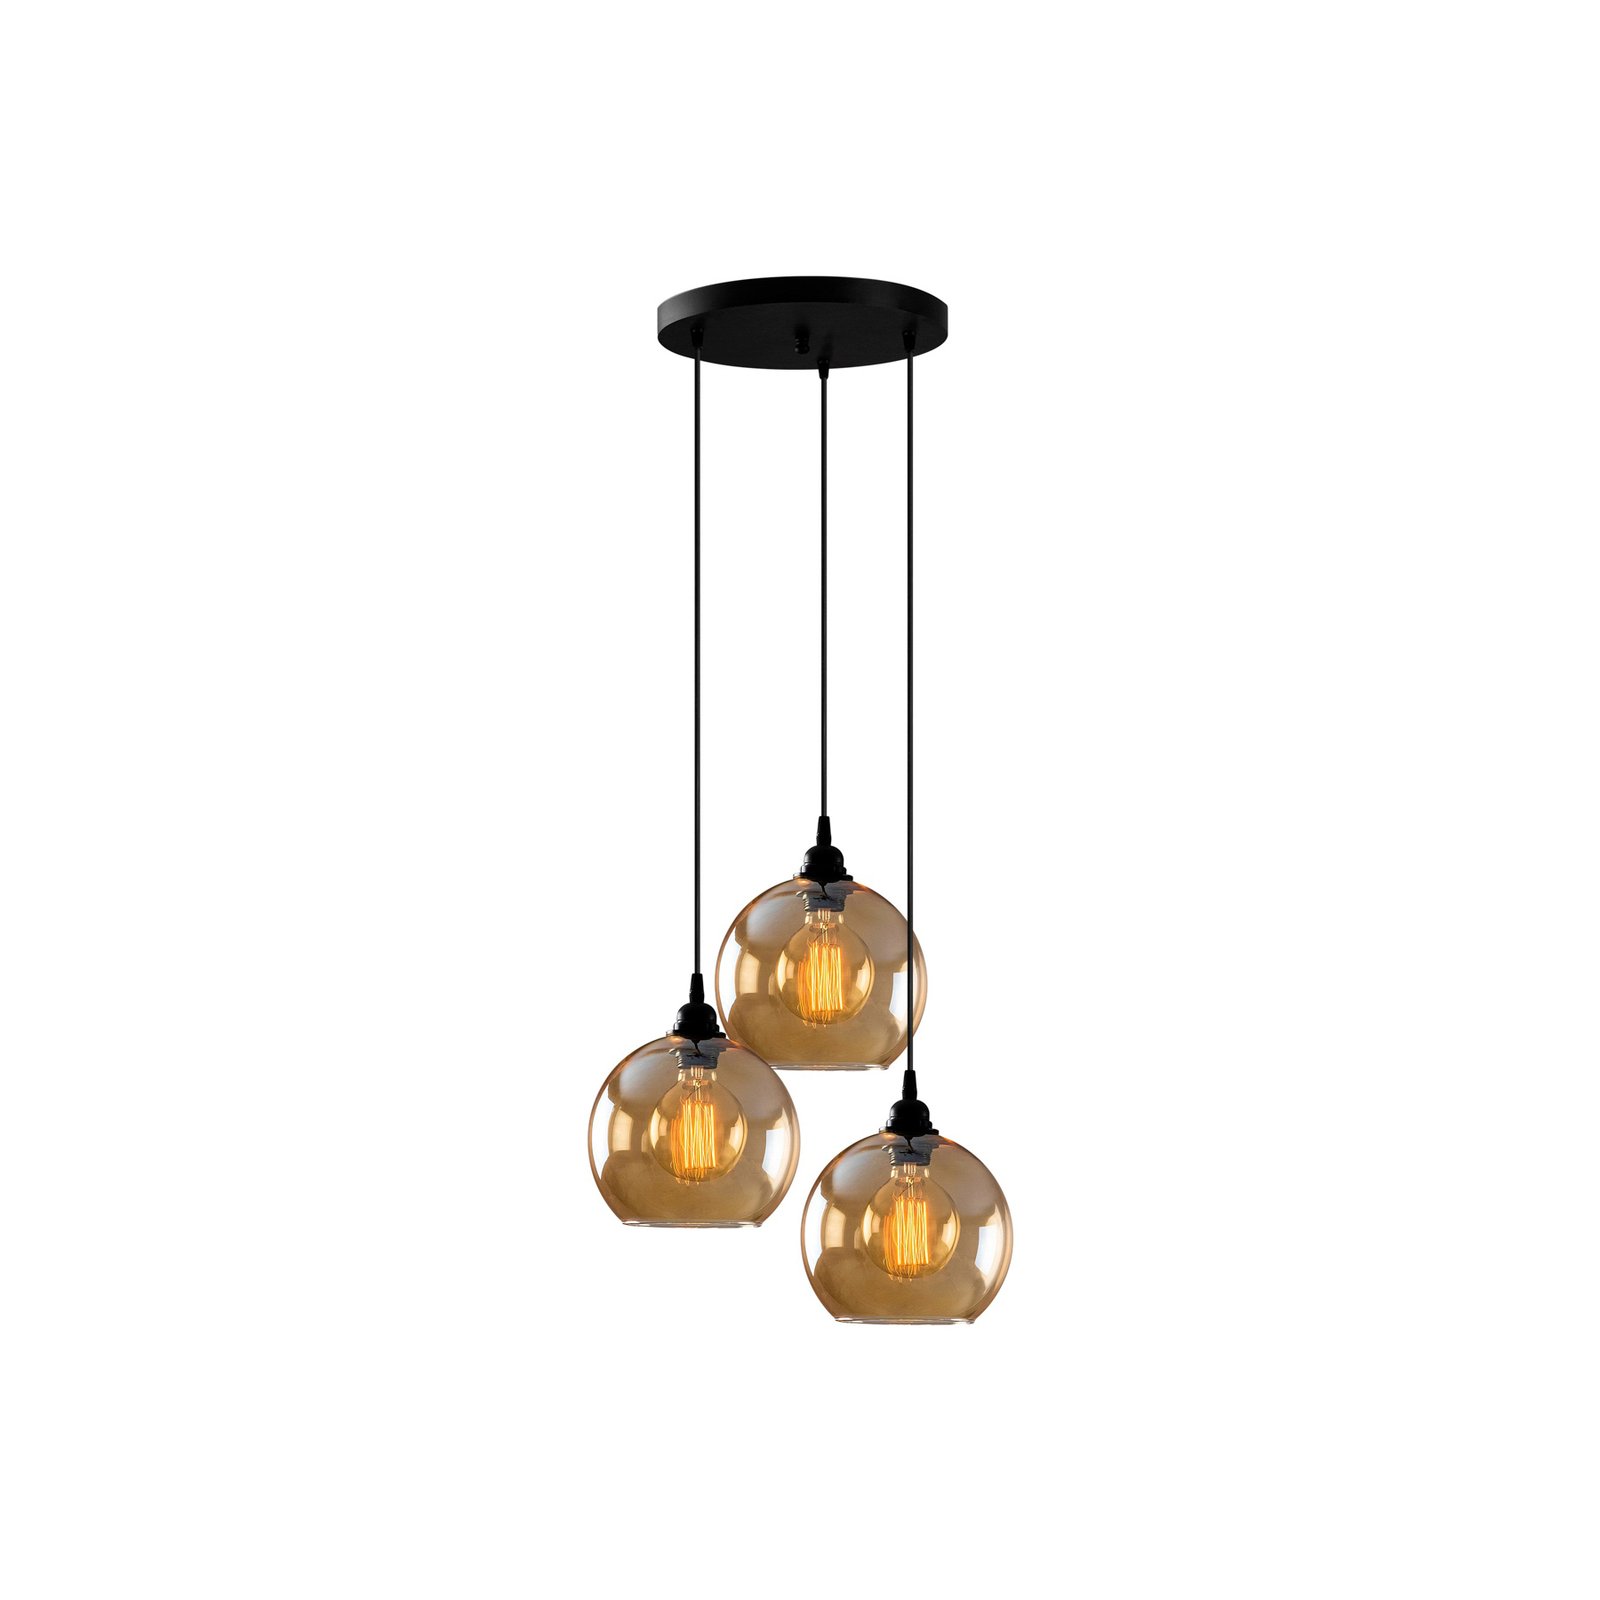 Hanglamp goud 021 3-lamps rondel glas Ø20cm